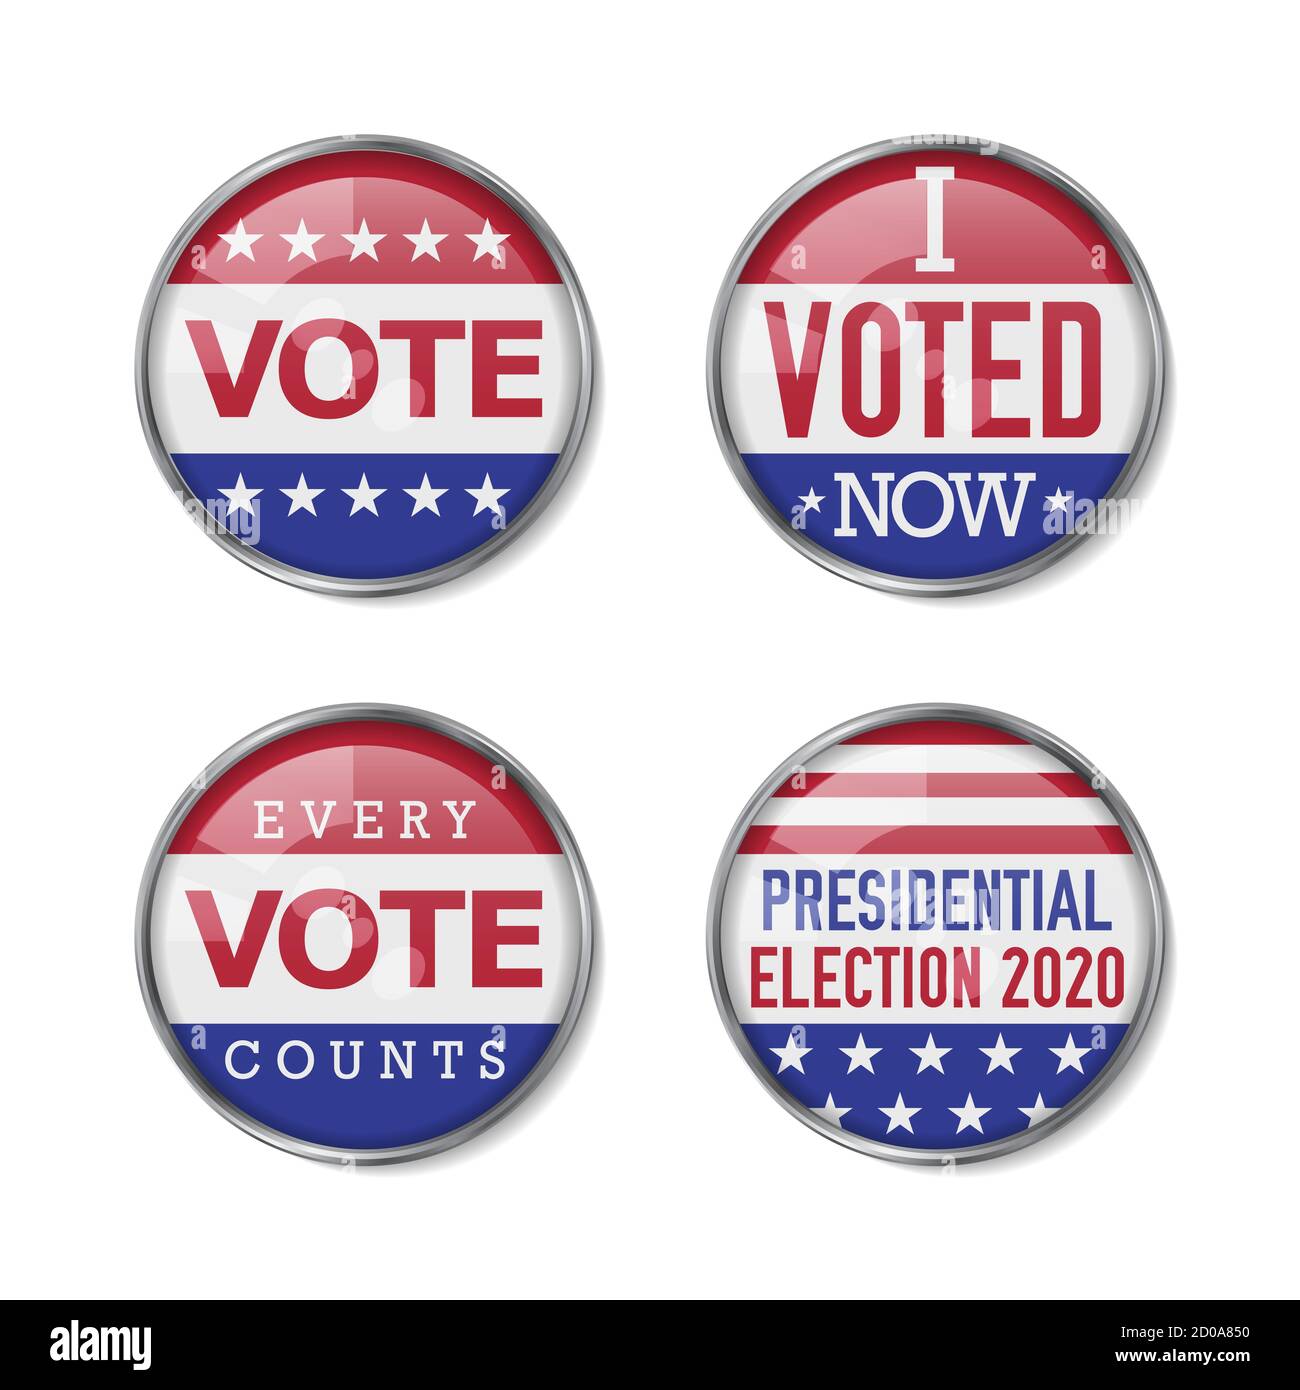 Voting badge realistic set. 2020 United States presidential election. illustration. Stock Photo